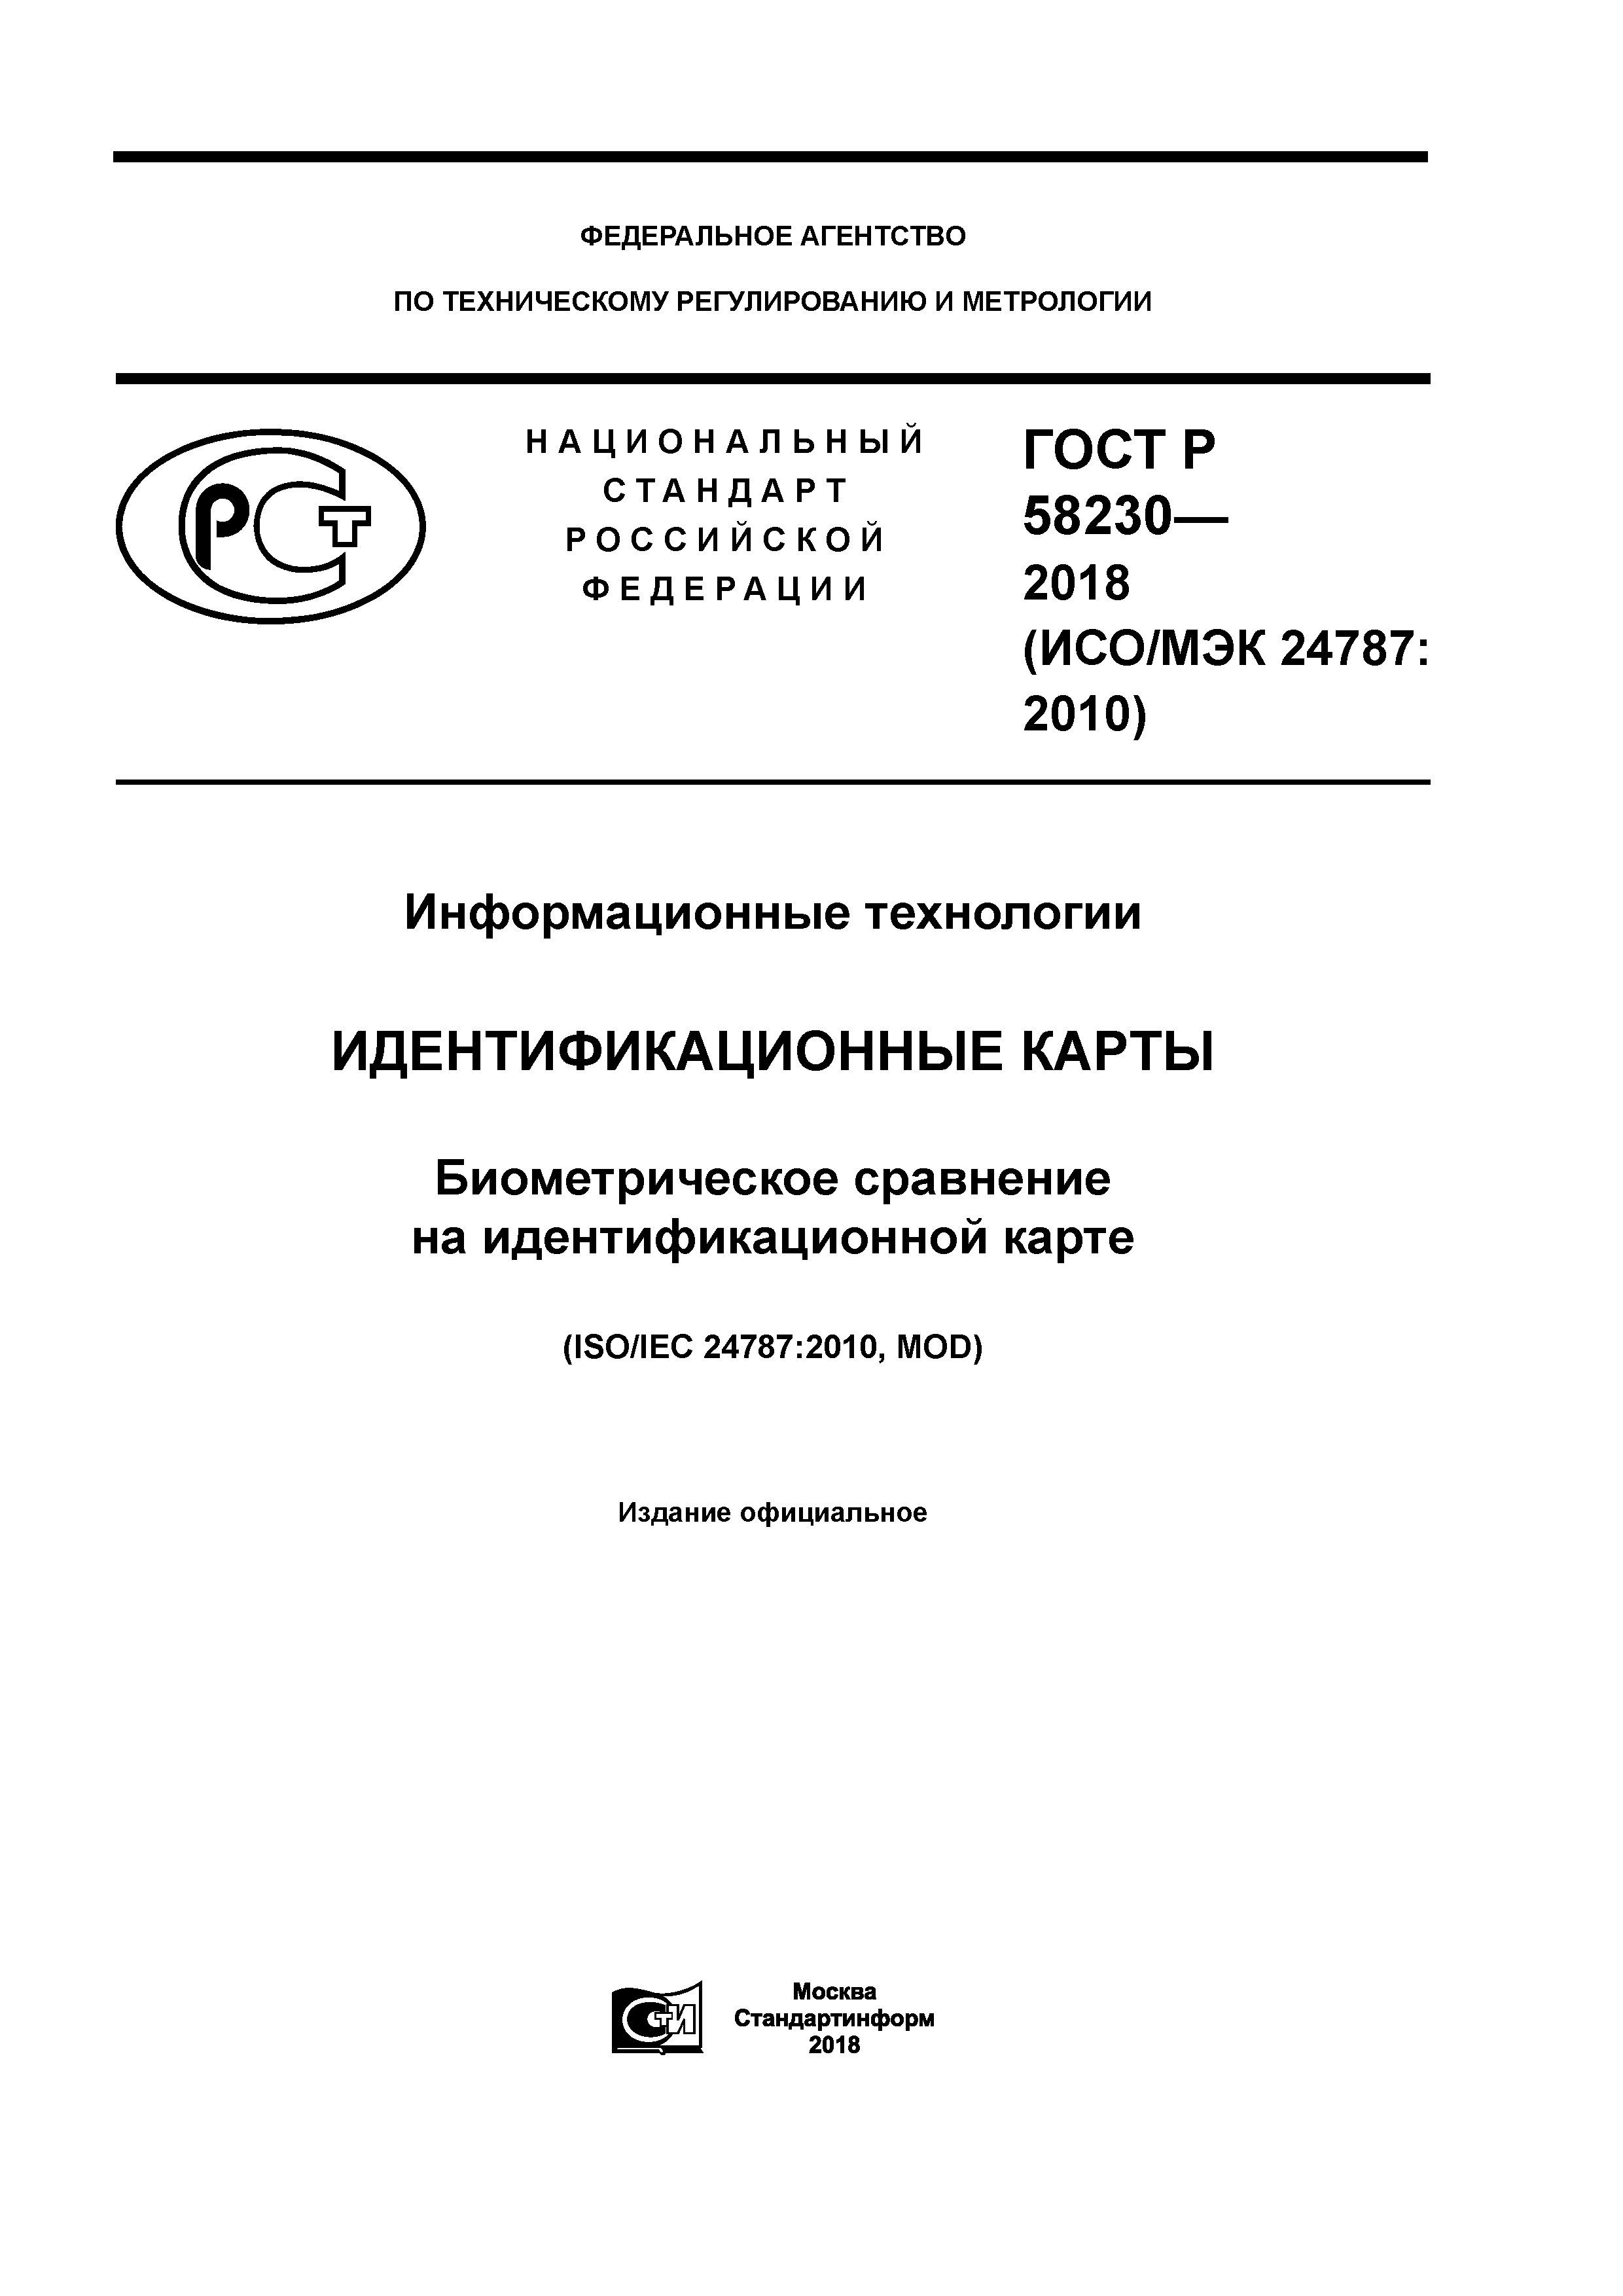 ГОСТ Р 58230-2018